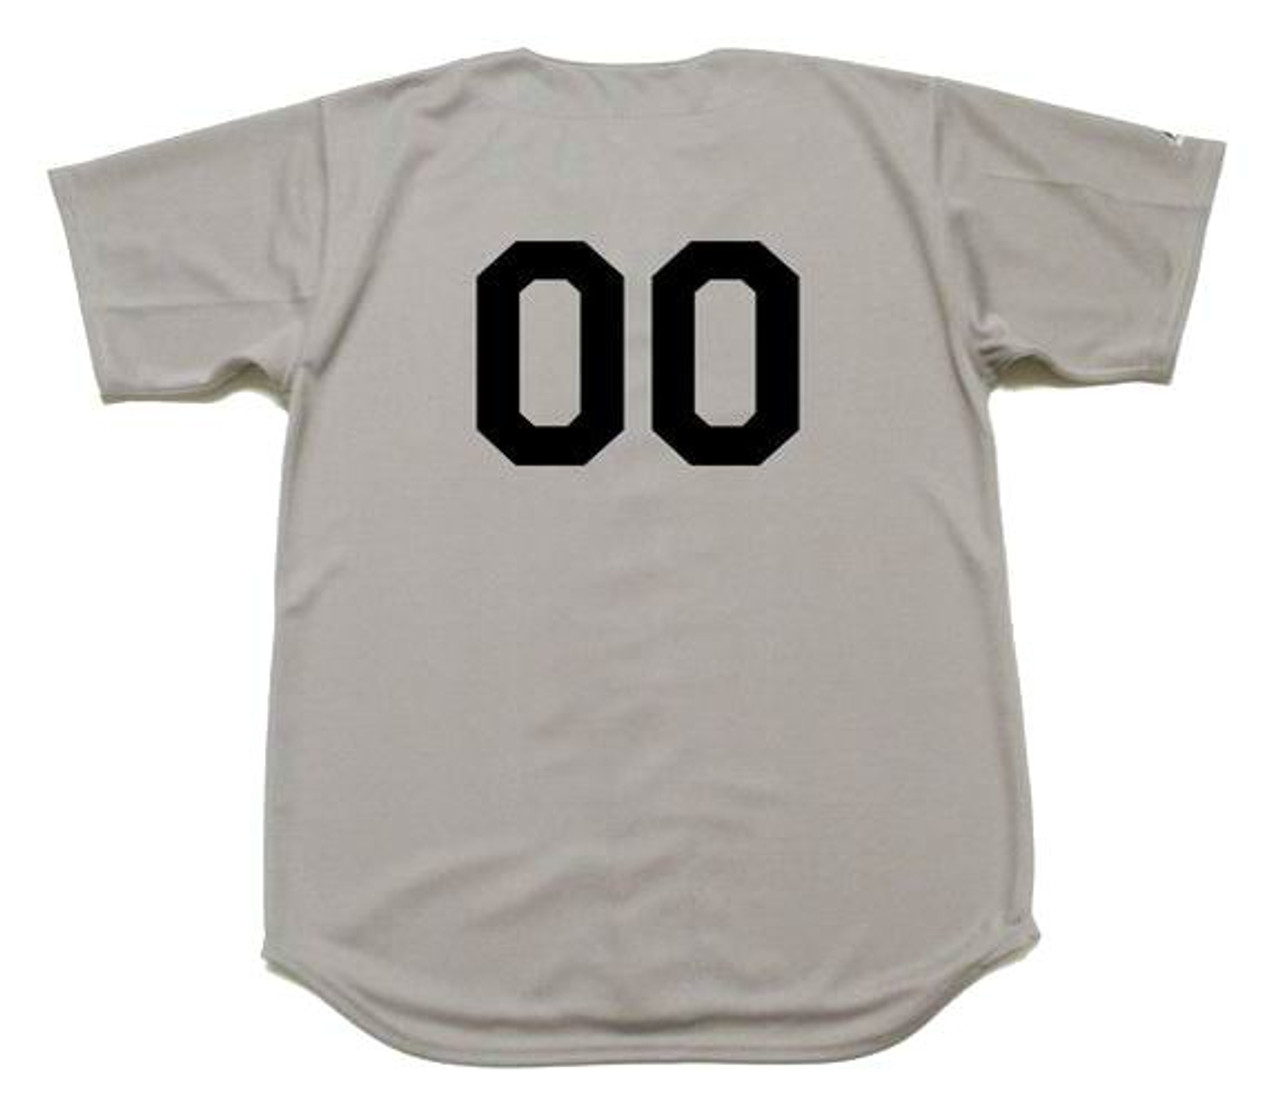 Customizable New York Yankees T-Shirts & Jerseys